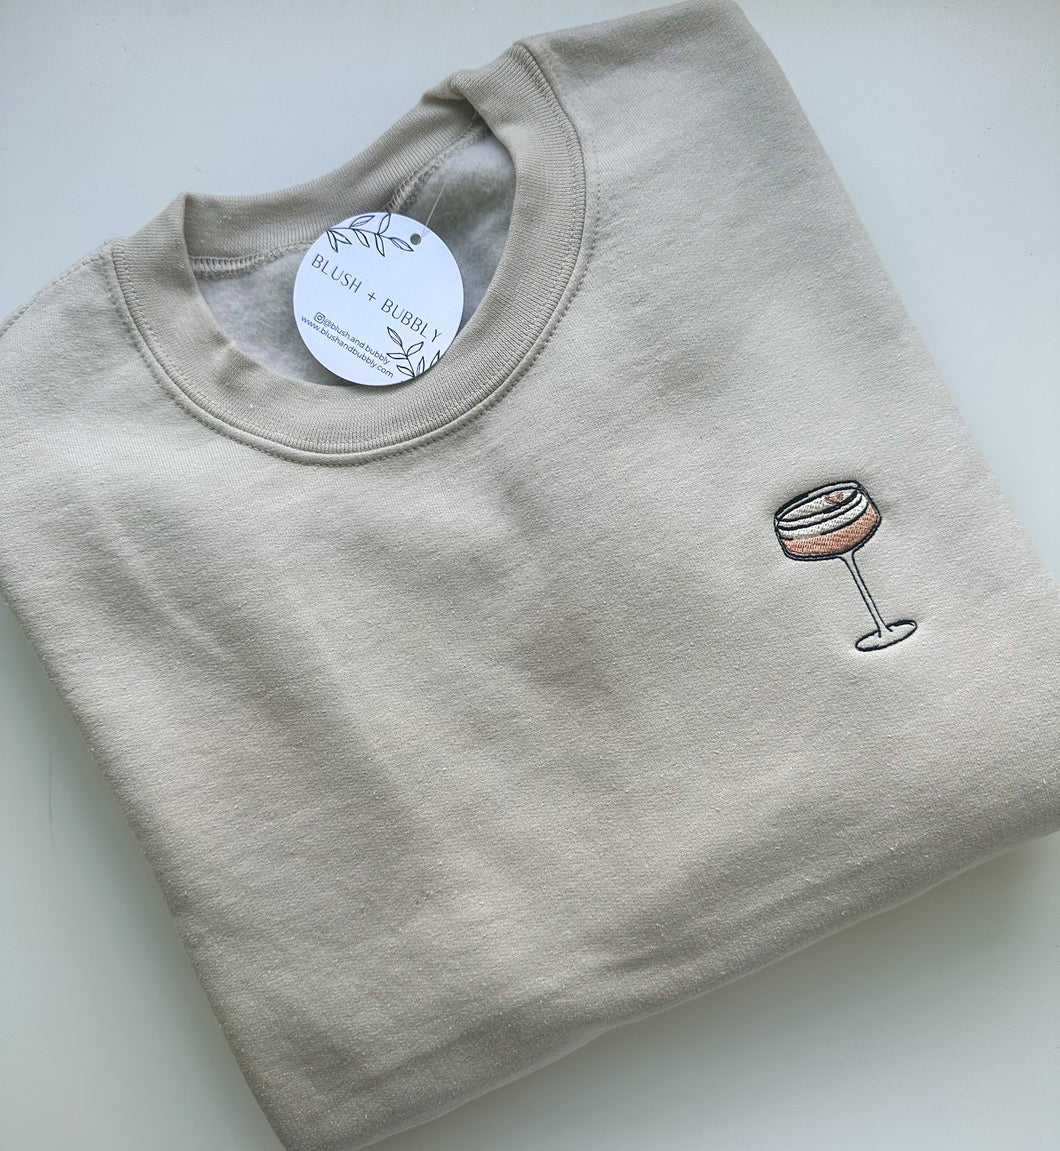 Espresso Martini Embroidered Sweatshirt (Tan)